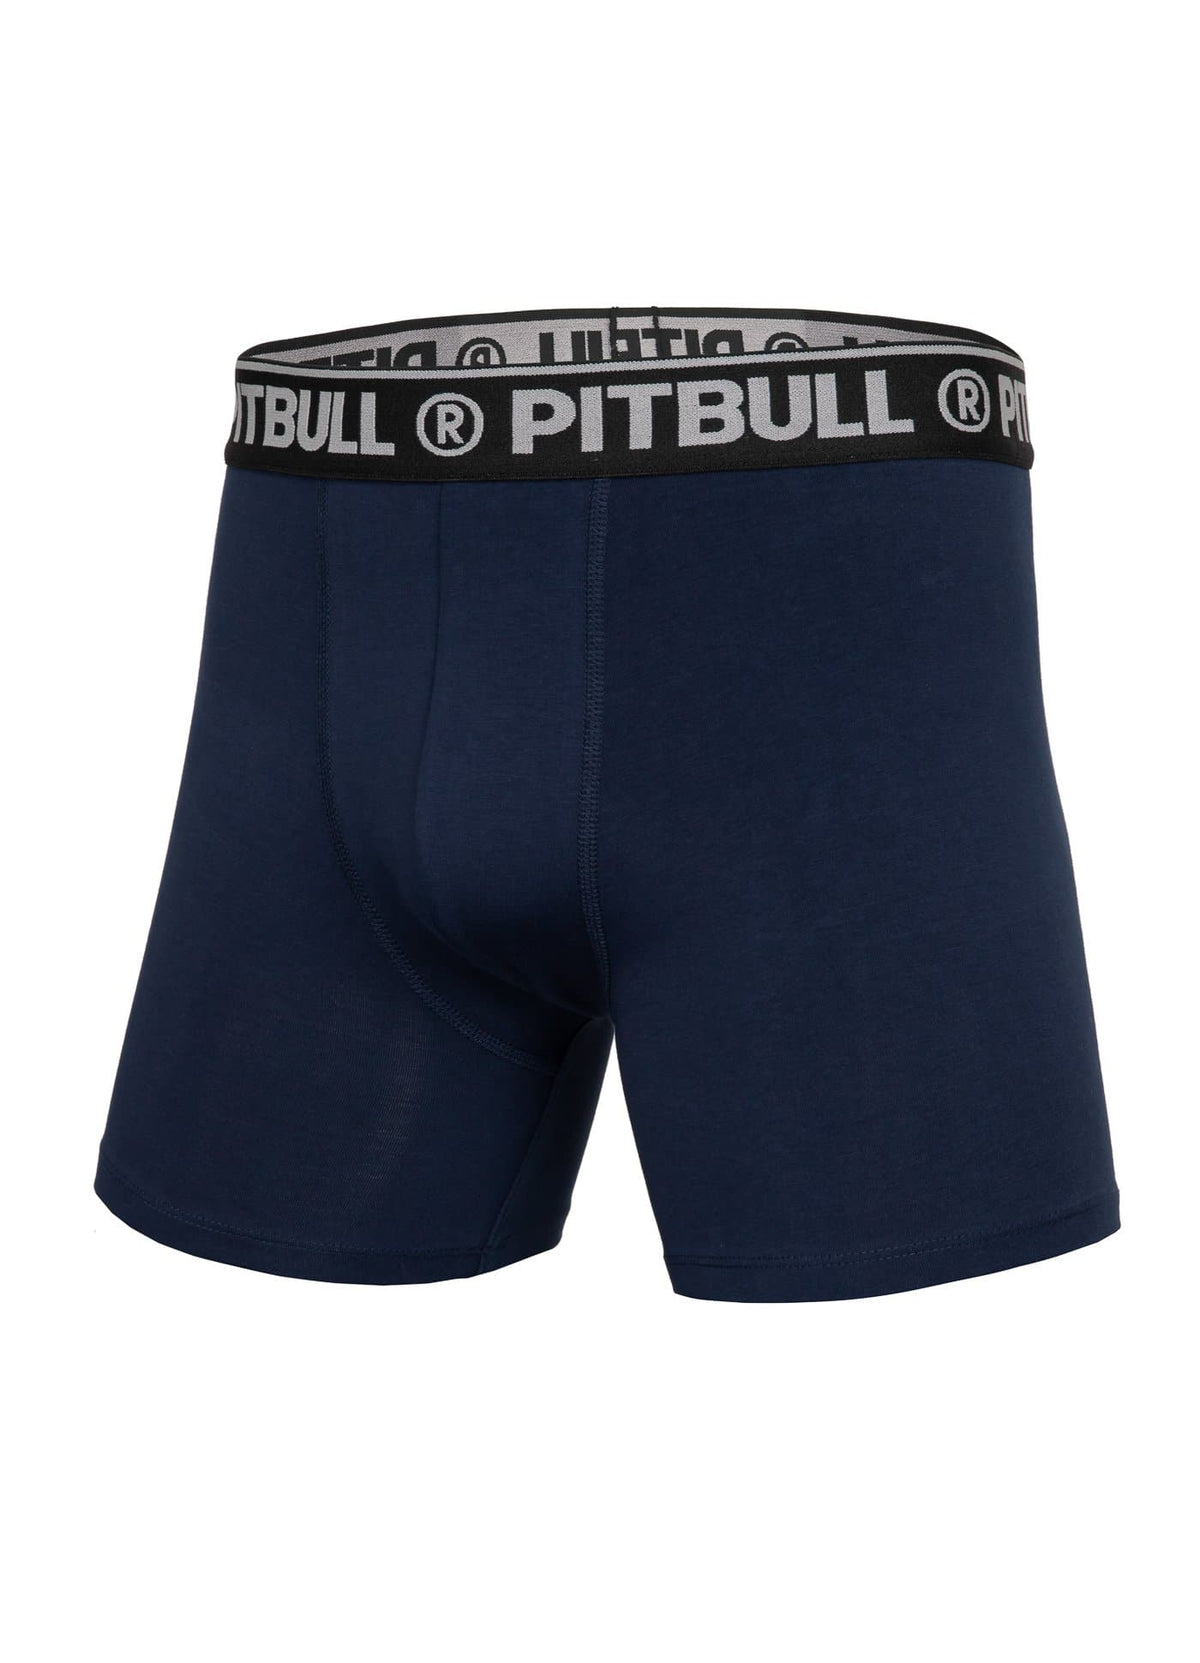 Boxer Shorts VI 3pack Olive/Dark Navy/Black - Pitbull West Coast International Store 